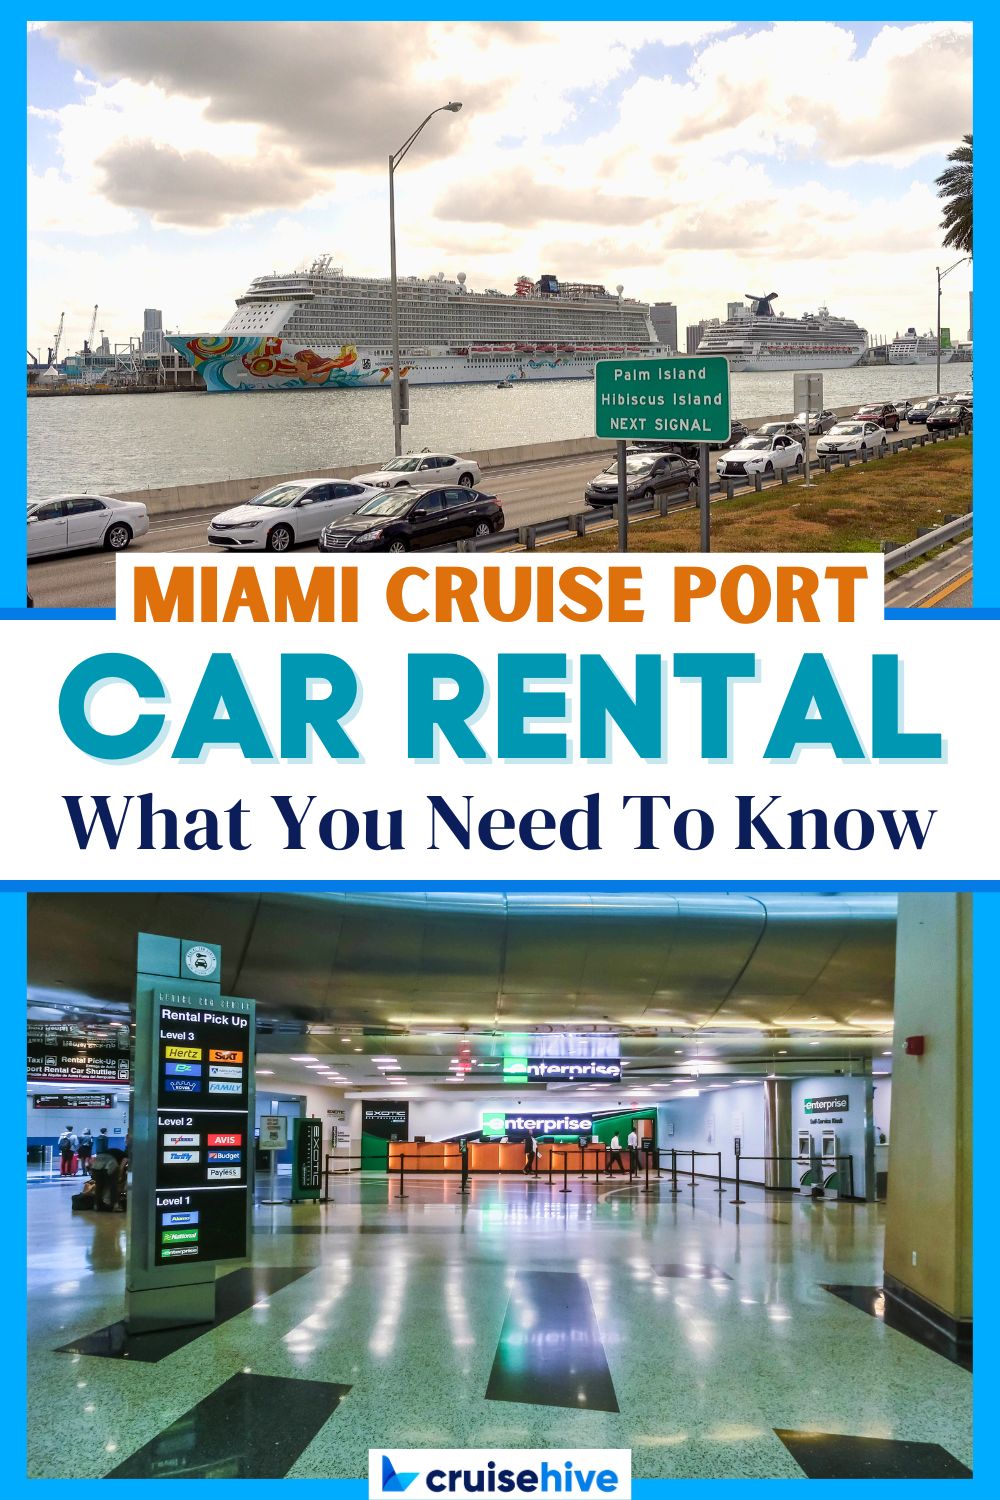 Miami Cruise Port Car Rental